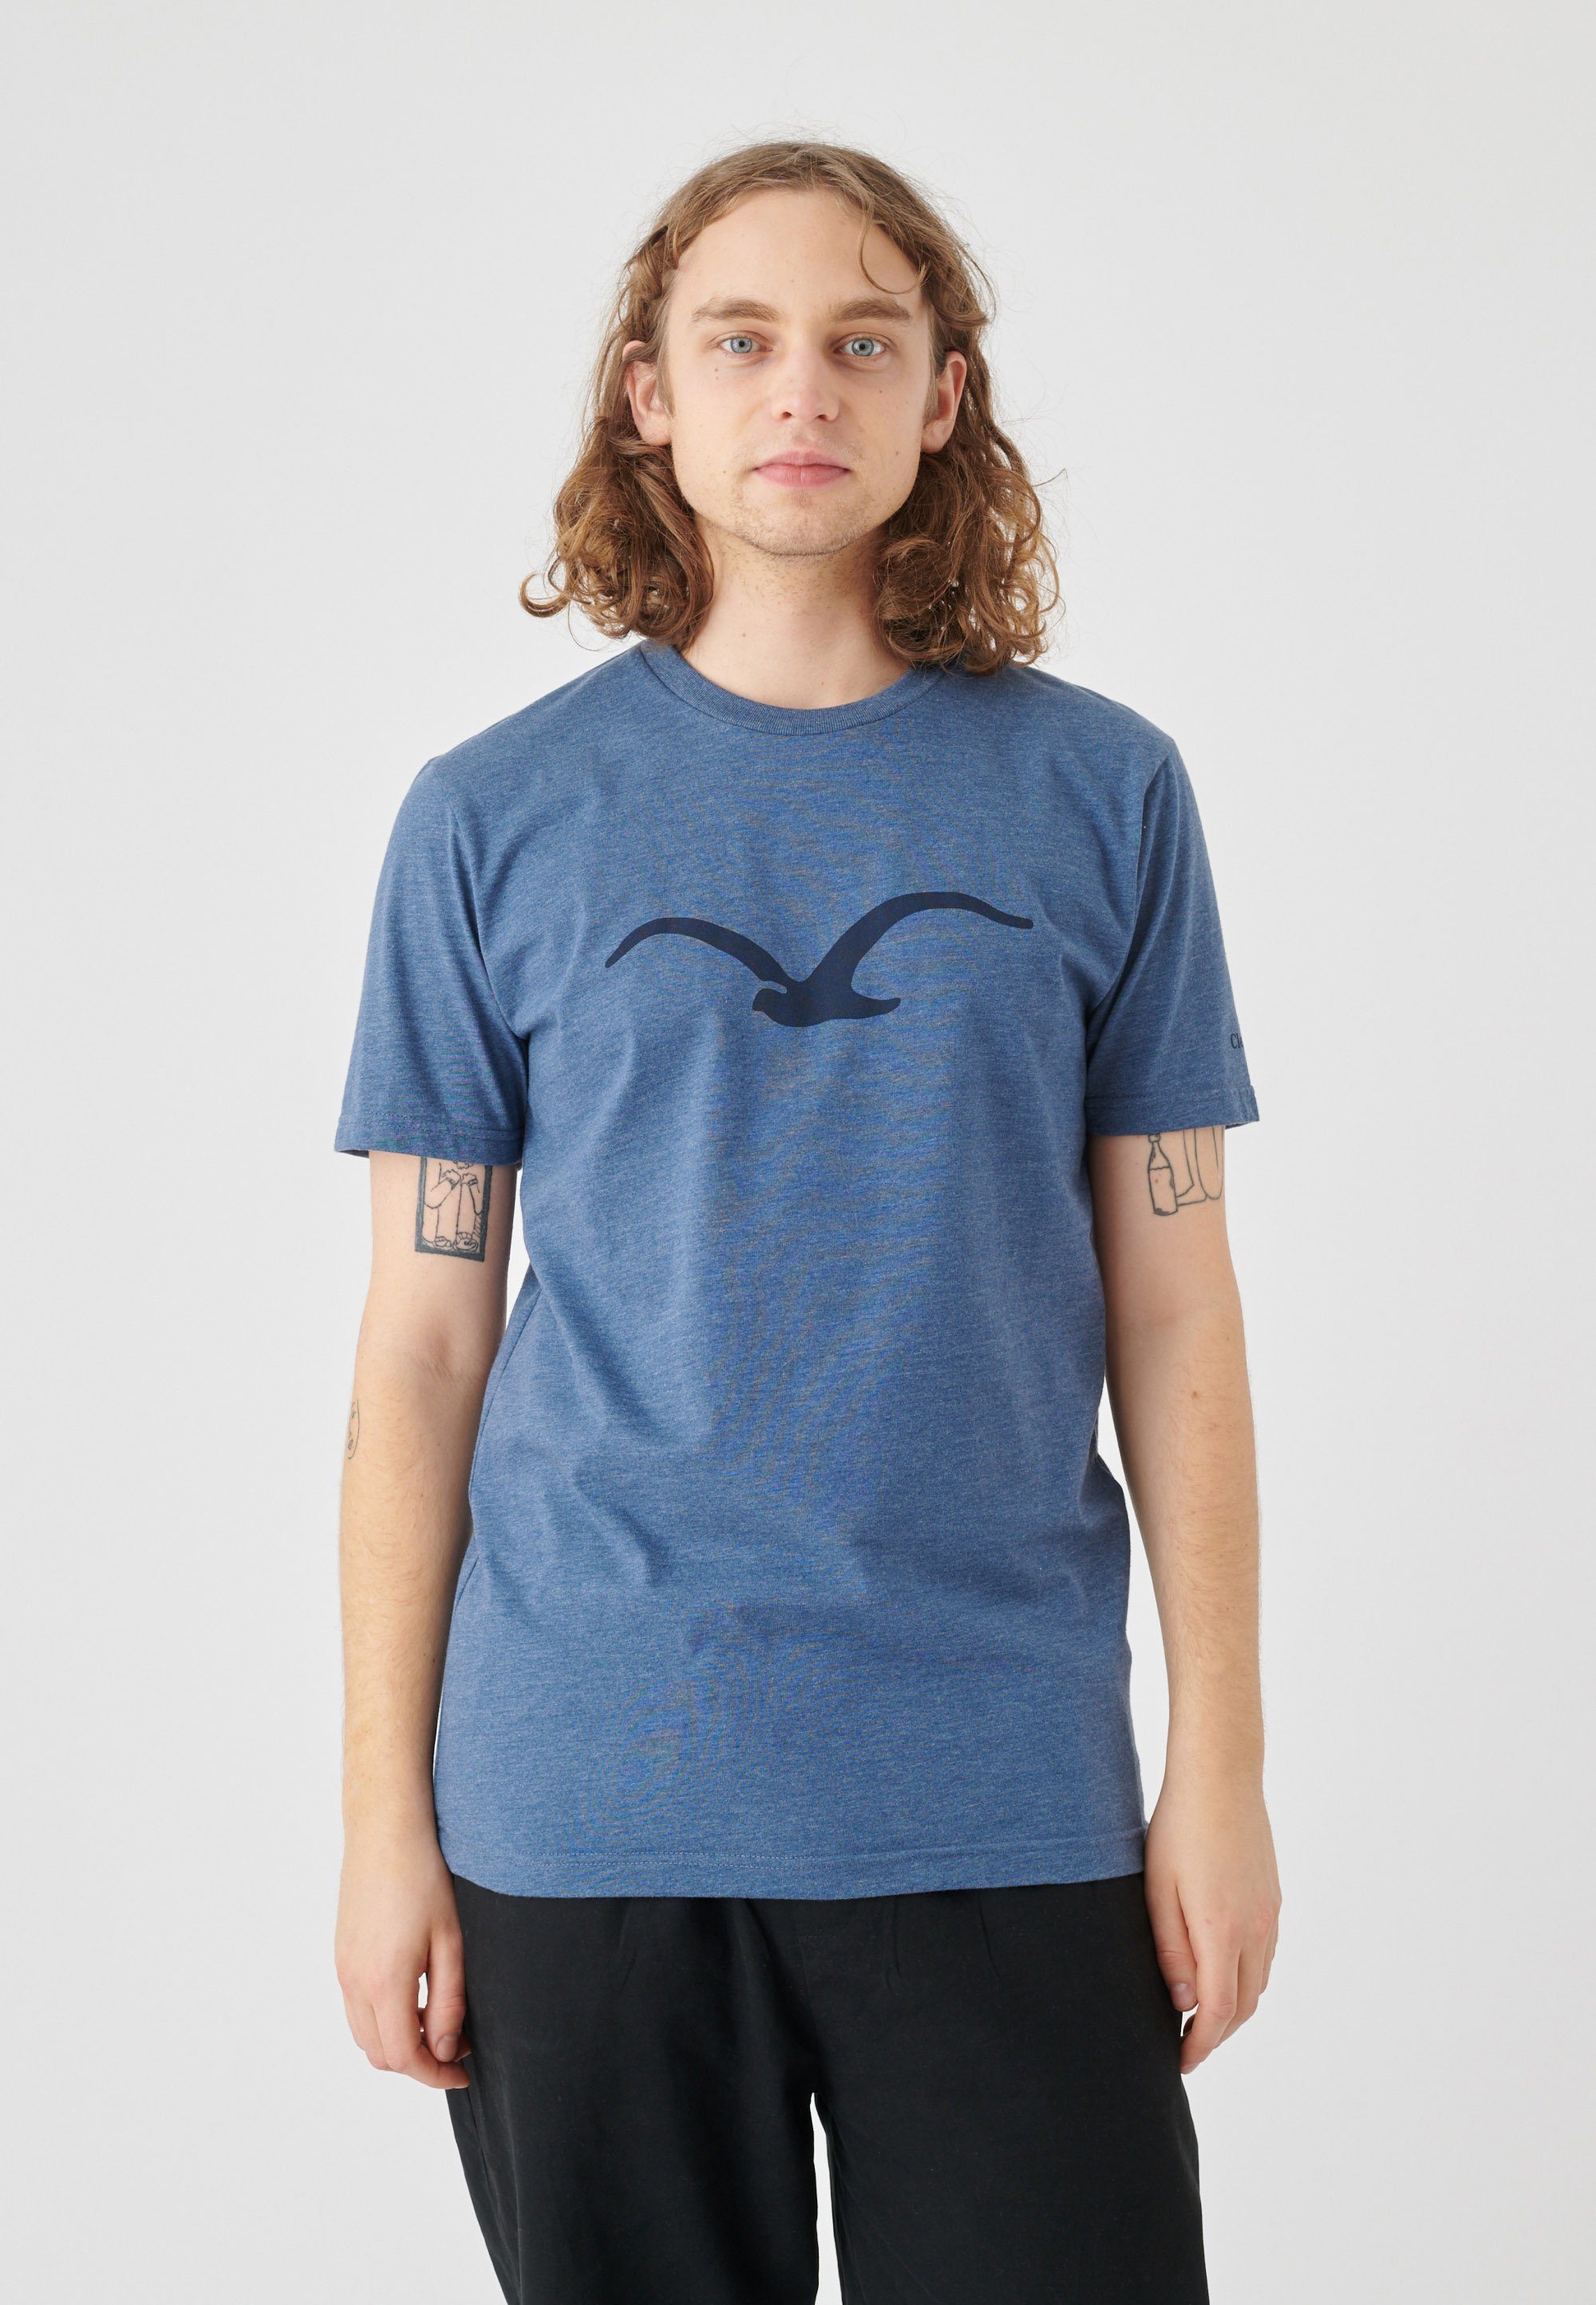 klassischem Mowe Print Cleptomanicx T-Shirt mit blau-blau